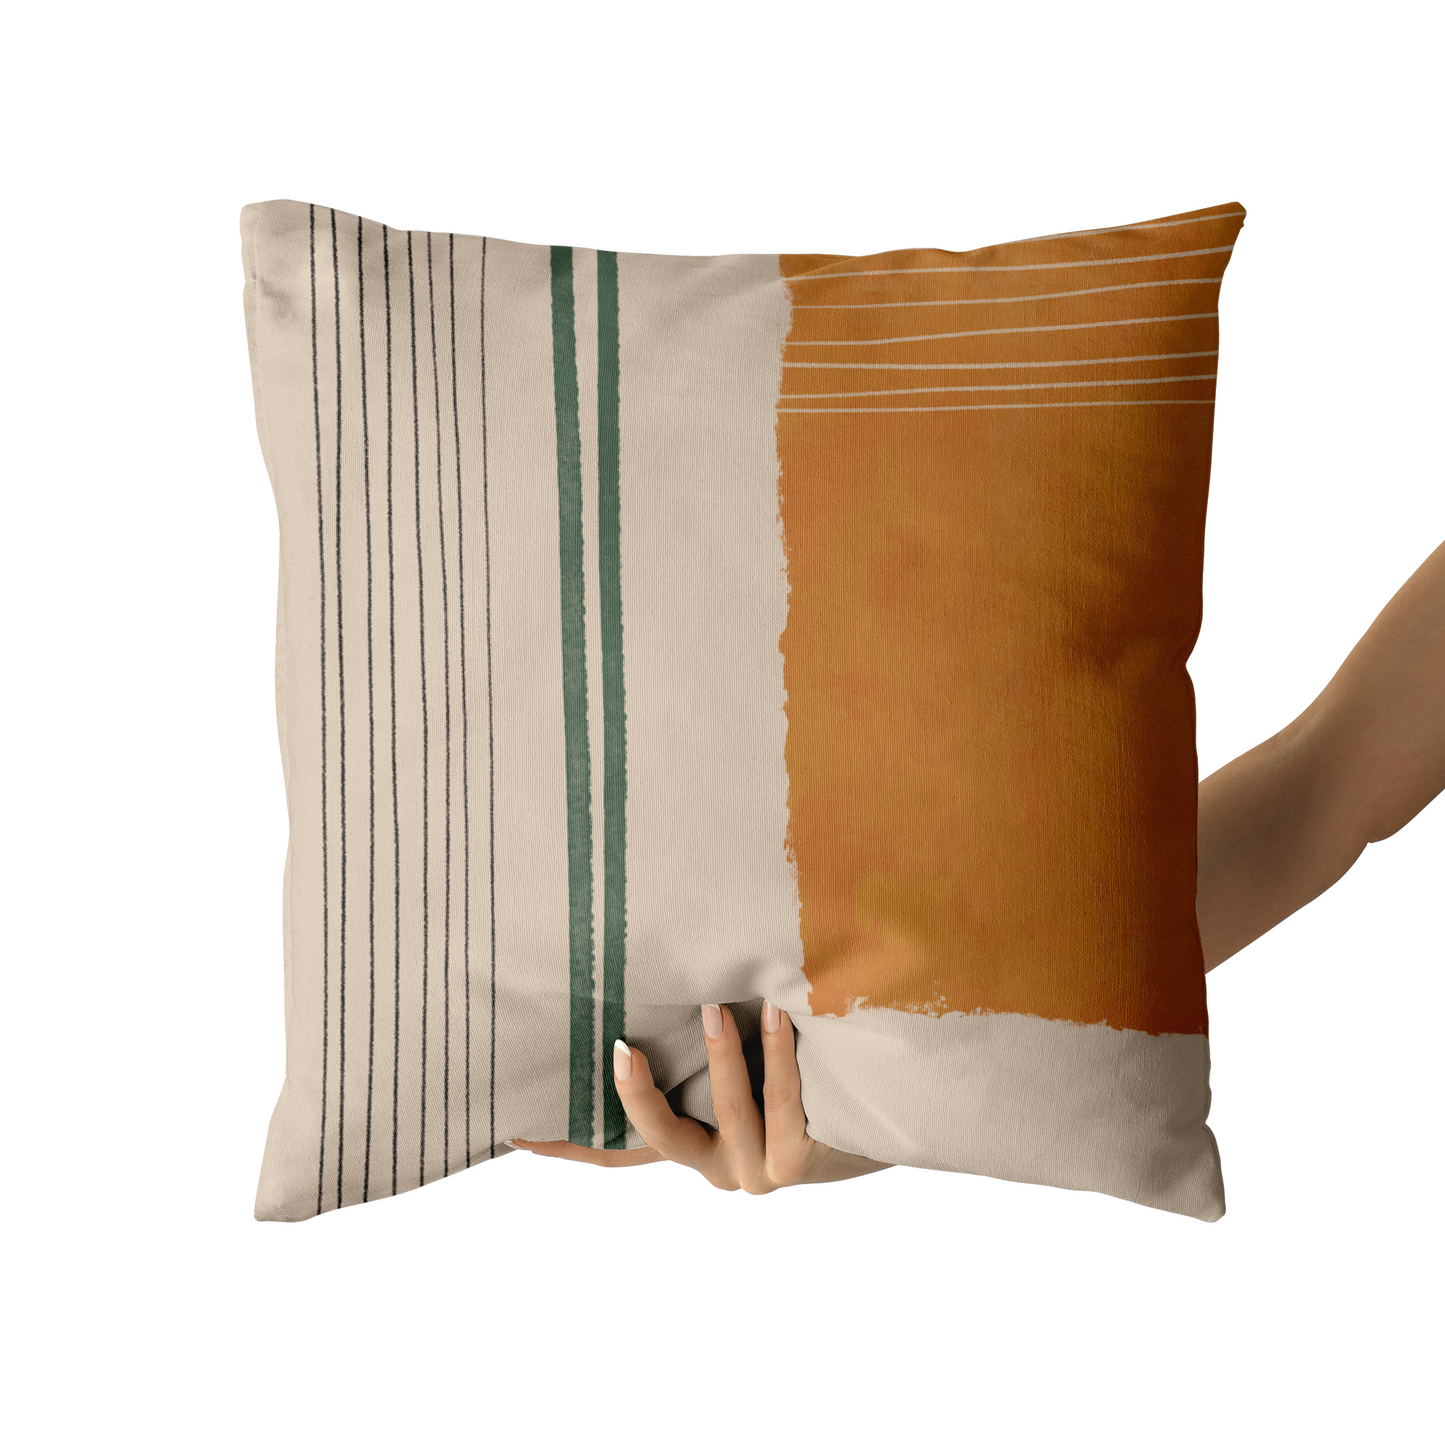 Handdrawn Abstract Minimalist Throw Pillow